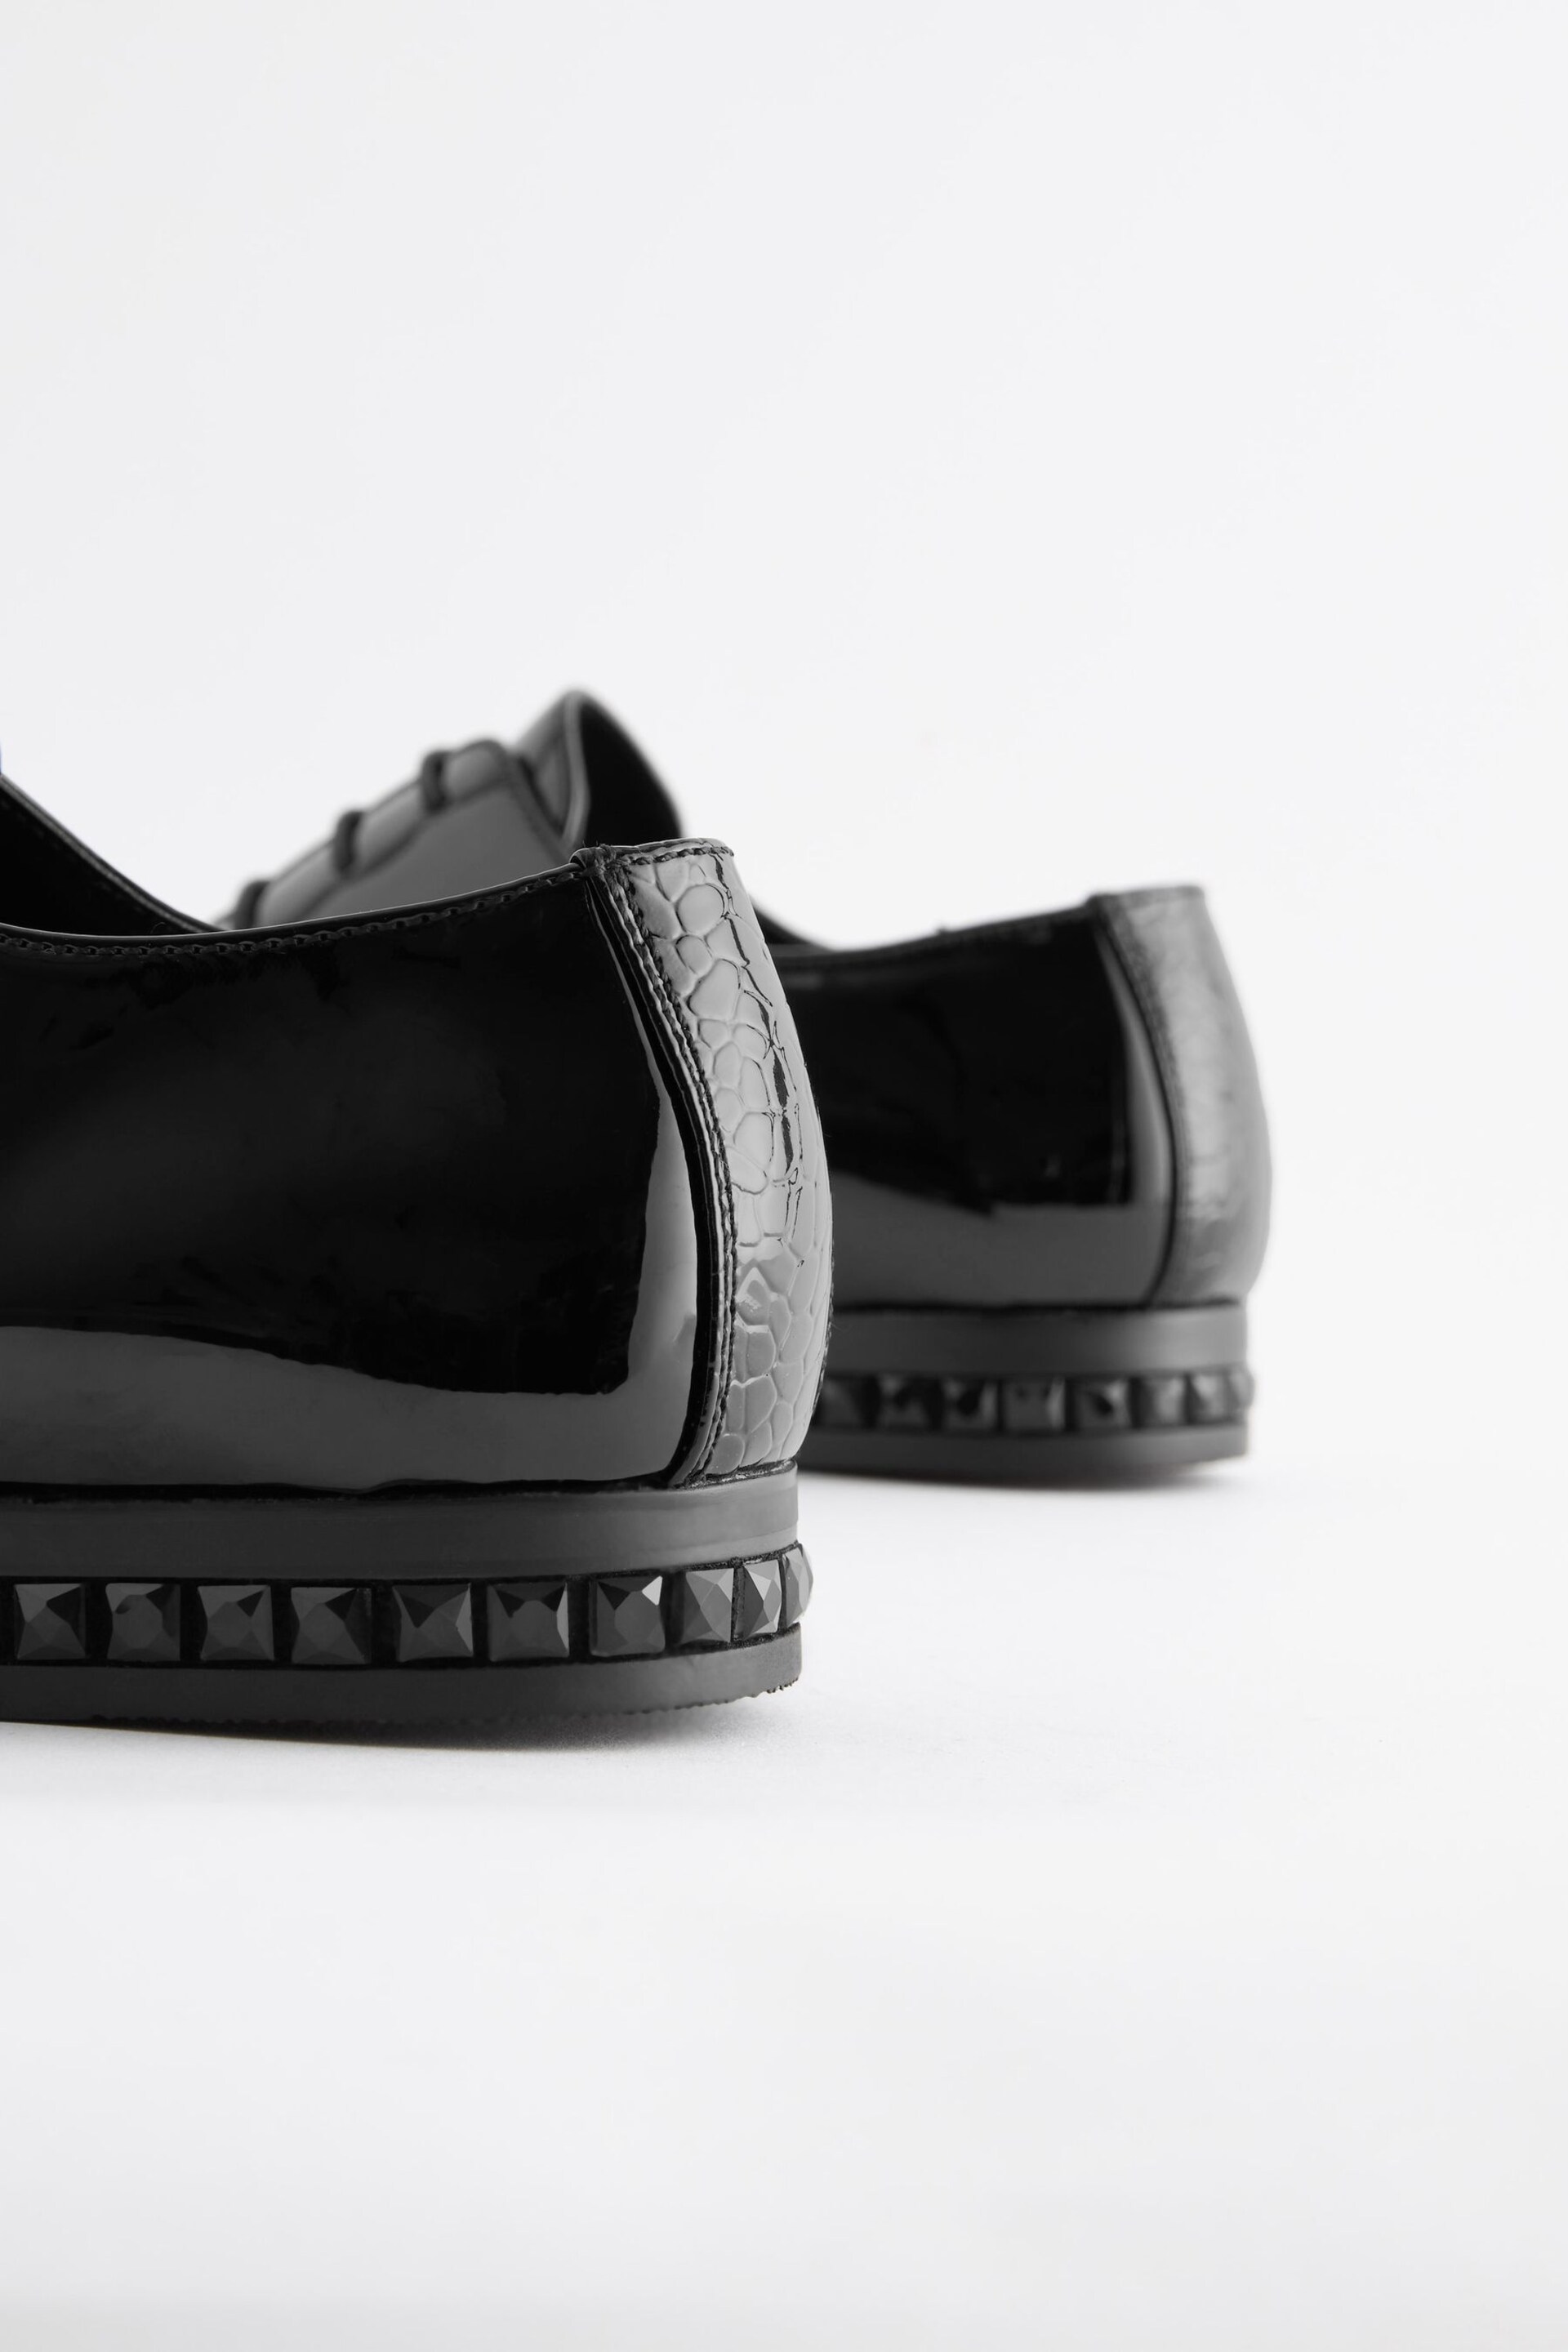 Black High Shine Jewel Trim Patent Derby Shoes - Image 4 of 5